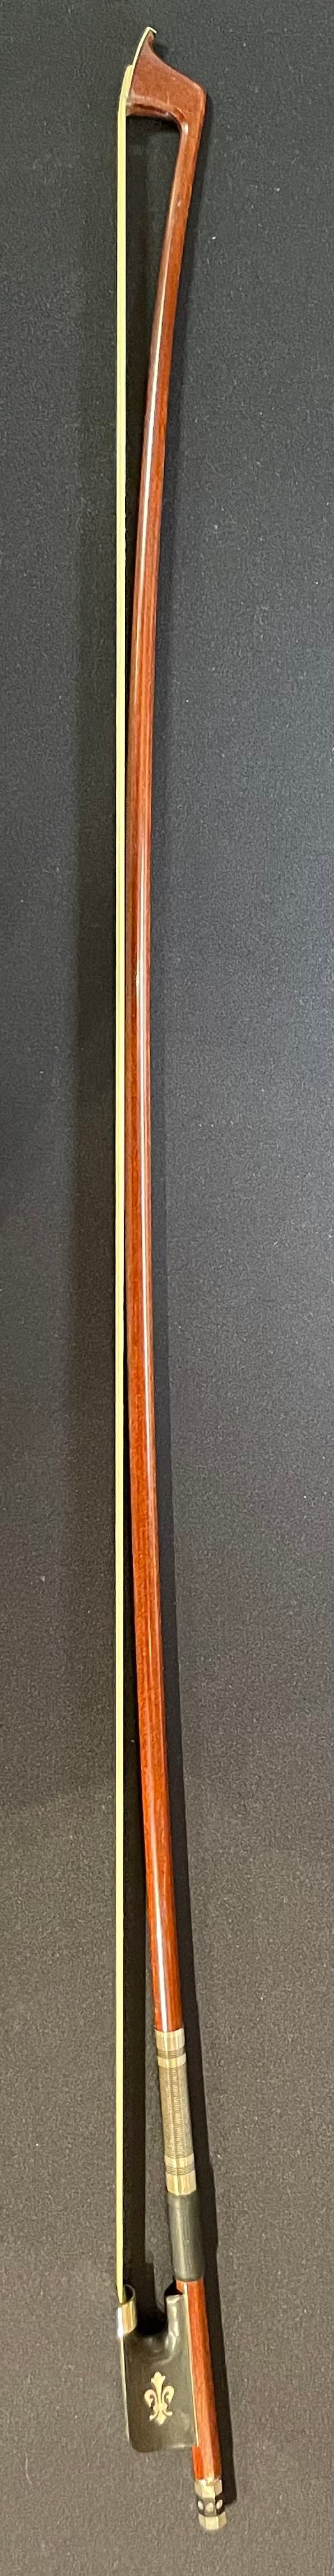 Full Size Viola Bow - Felix XT Wood Model